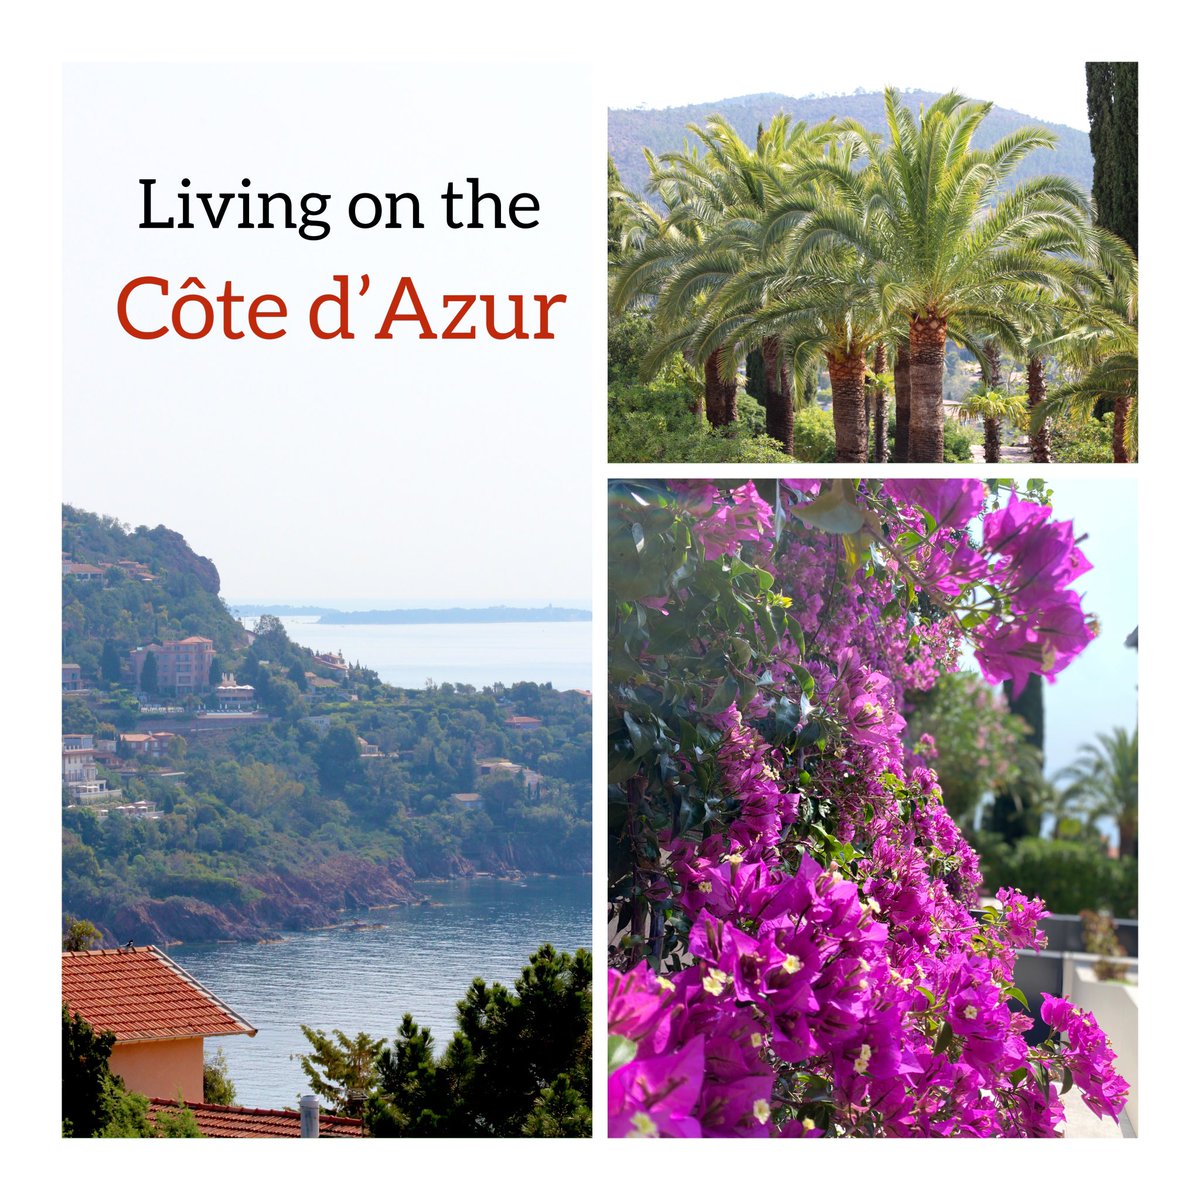 Living on the côte d’Azur 🏝️😎☀️We highlight our beautiful region ☀️ #cotedazur #cotedazurfrance ————————————
#iimmooalliance @iimmooA
————————————
#VisitCotedazur #ExploreCotedAzur #explore_regionsud #MassifdelEstérel #VisitEsterel #esterelcotedazur #naturelovers